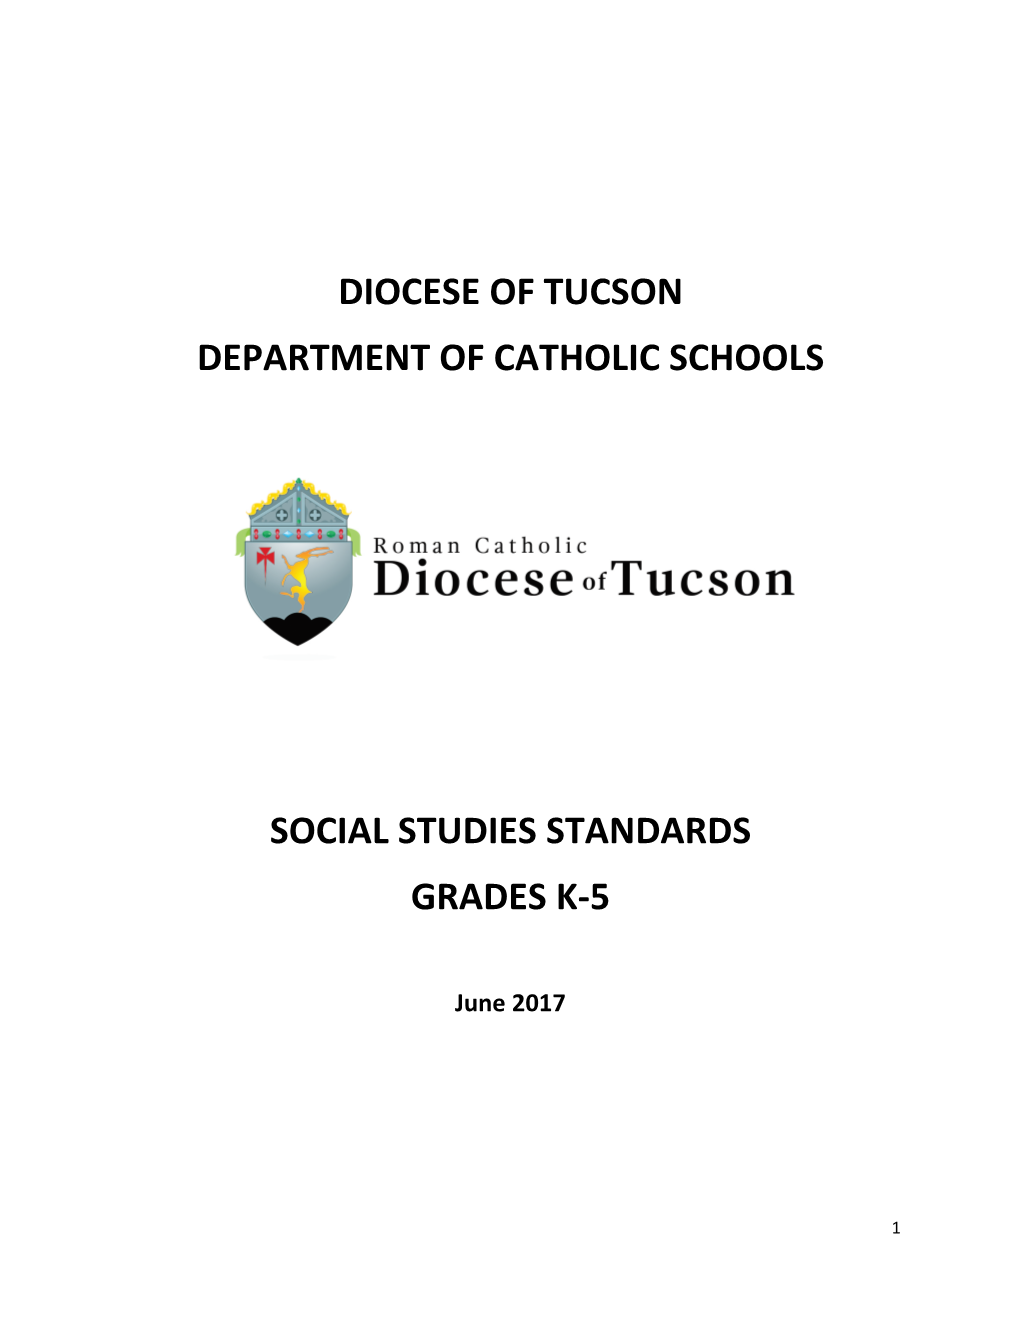 Social Studies Standards Elementary